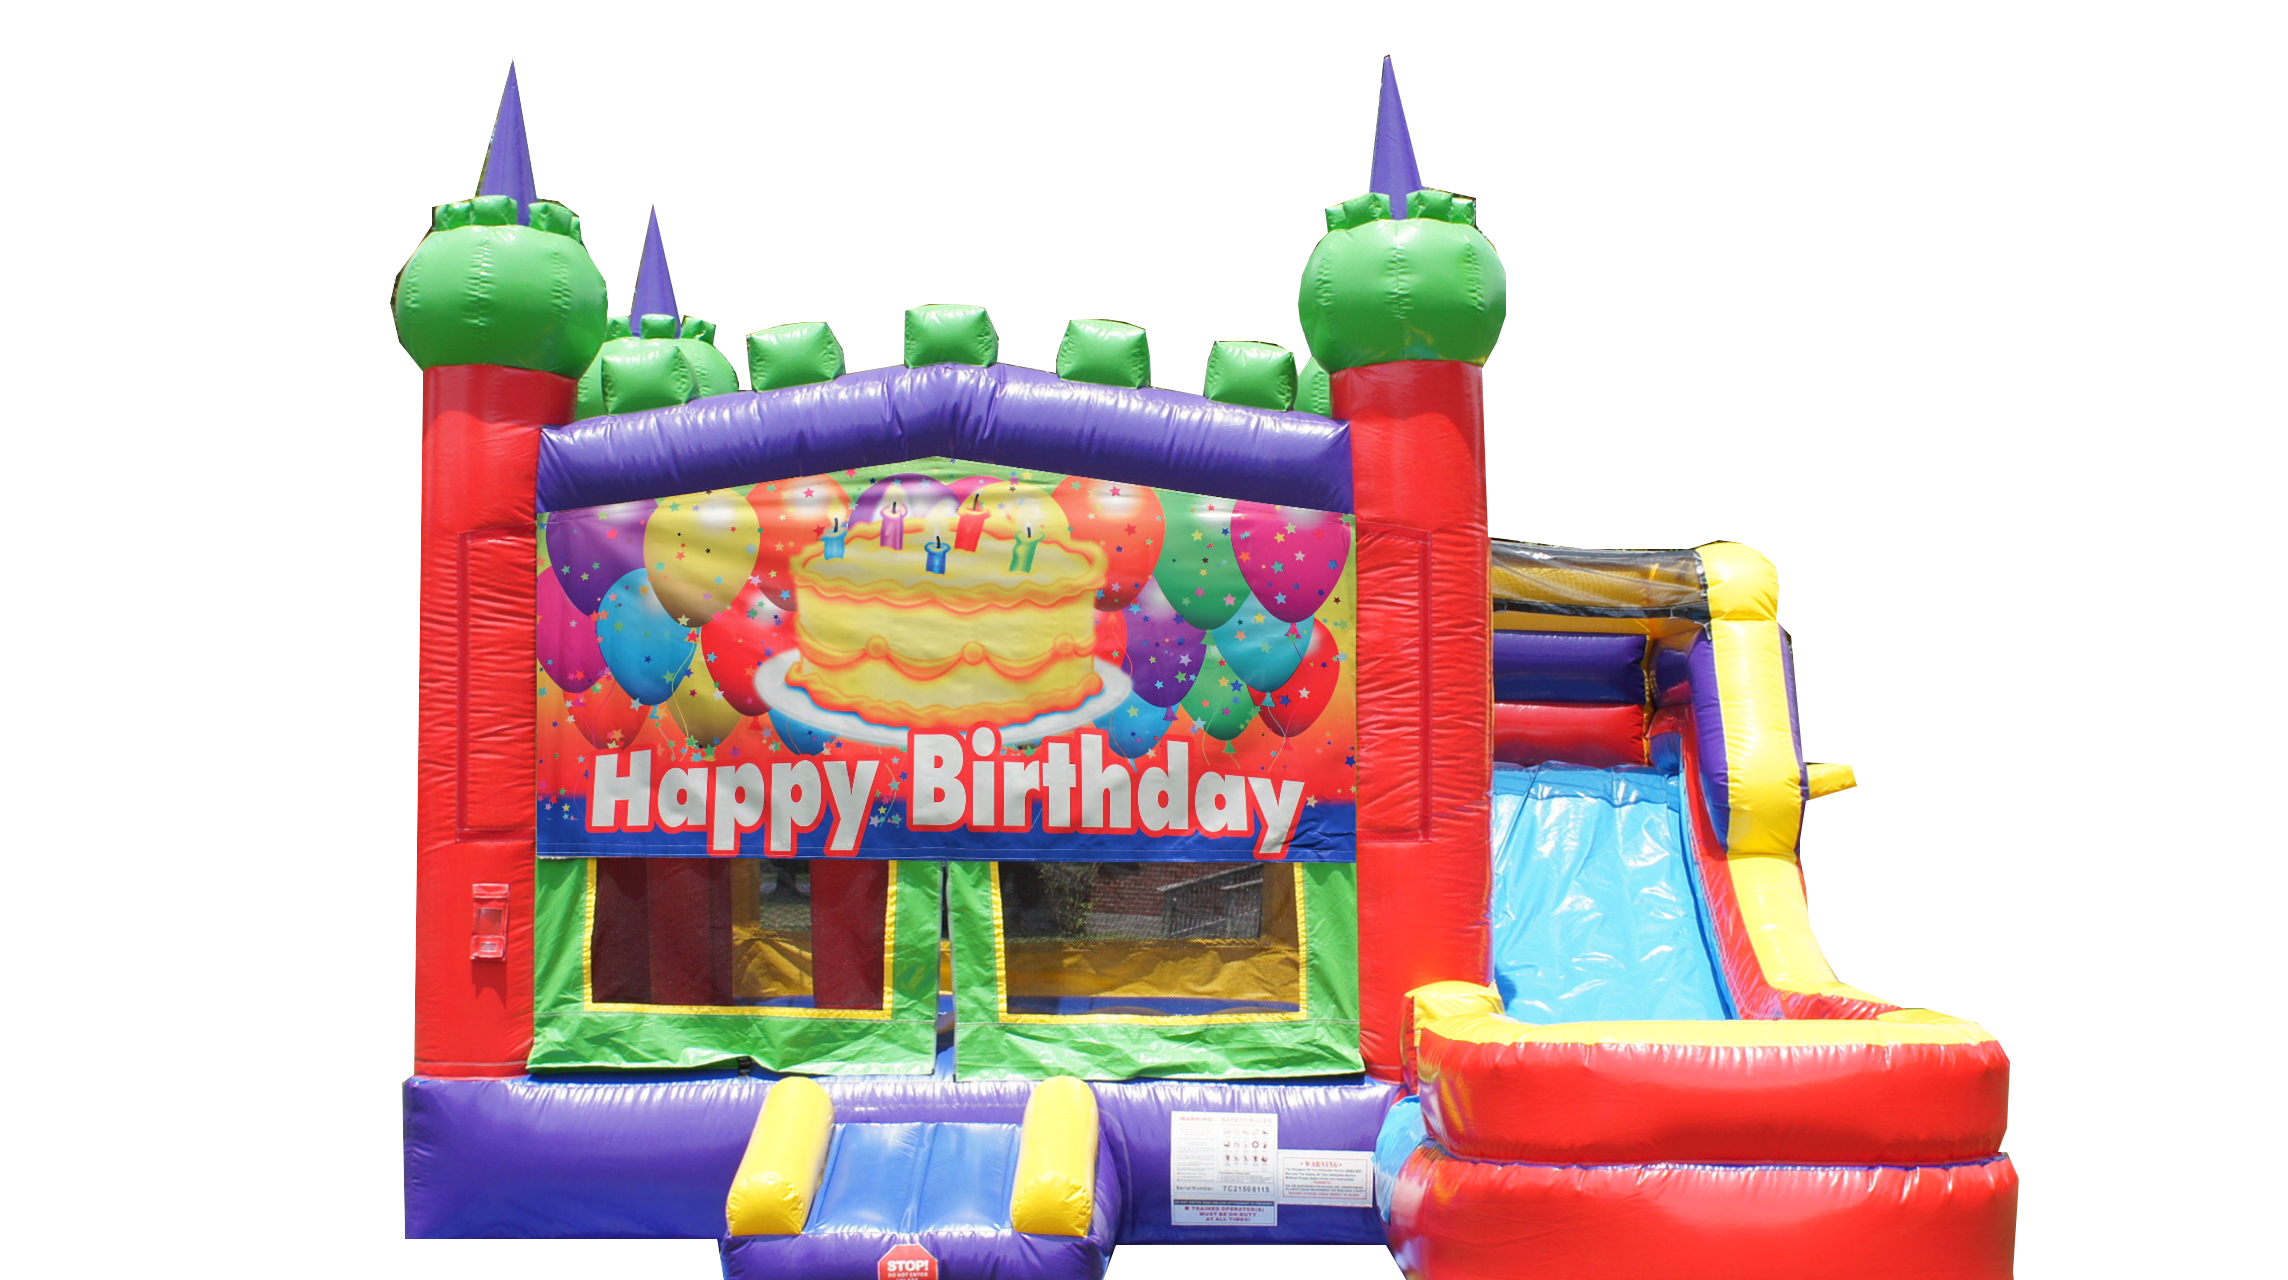 Happy birthday combo bounce house rentals Murfreesboro